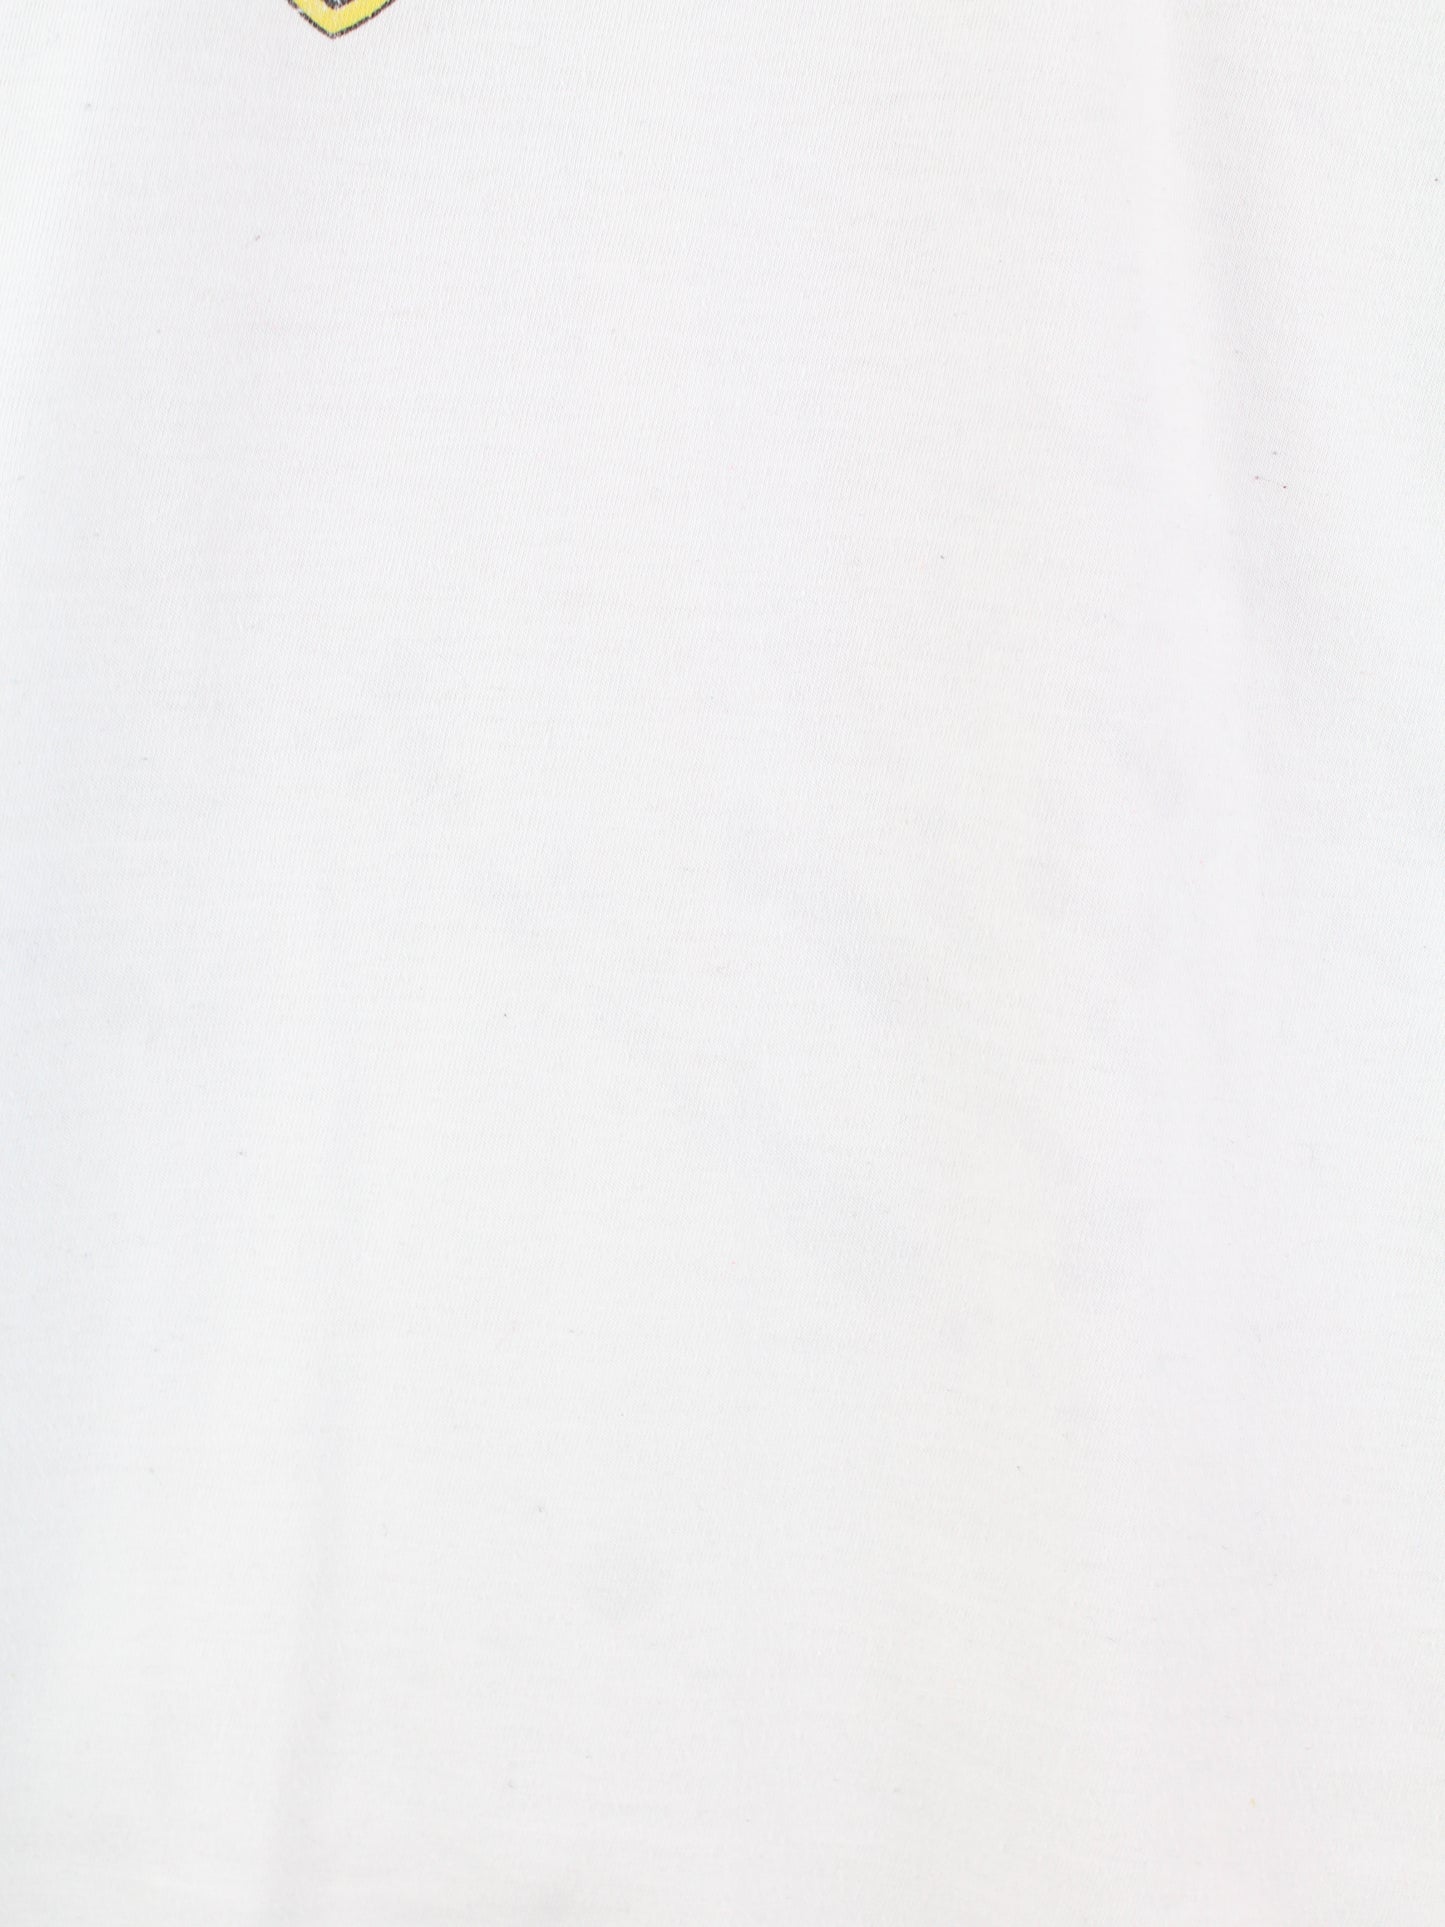 Looney Tunes Print T-Shirt Weiß M